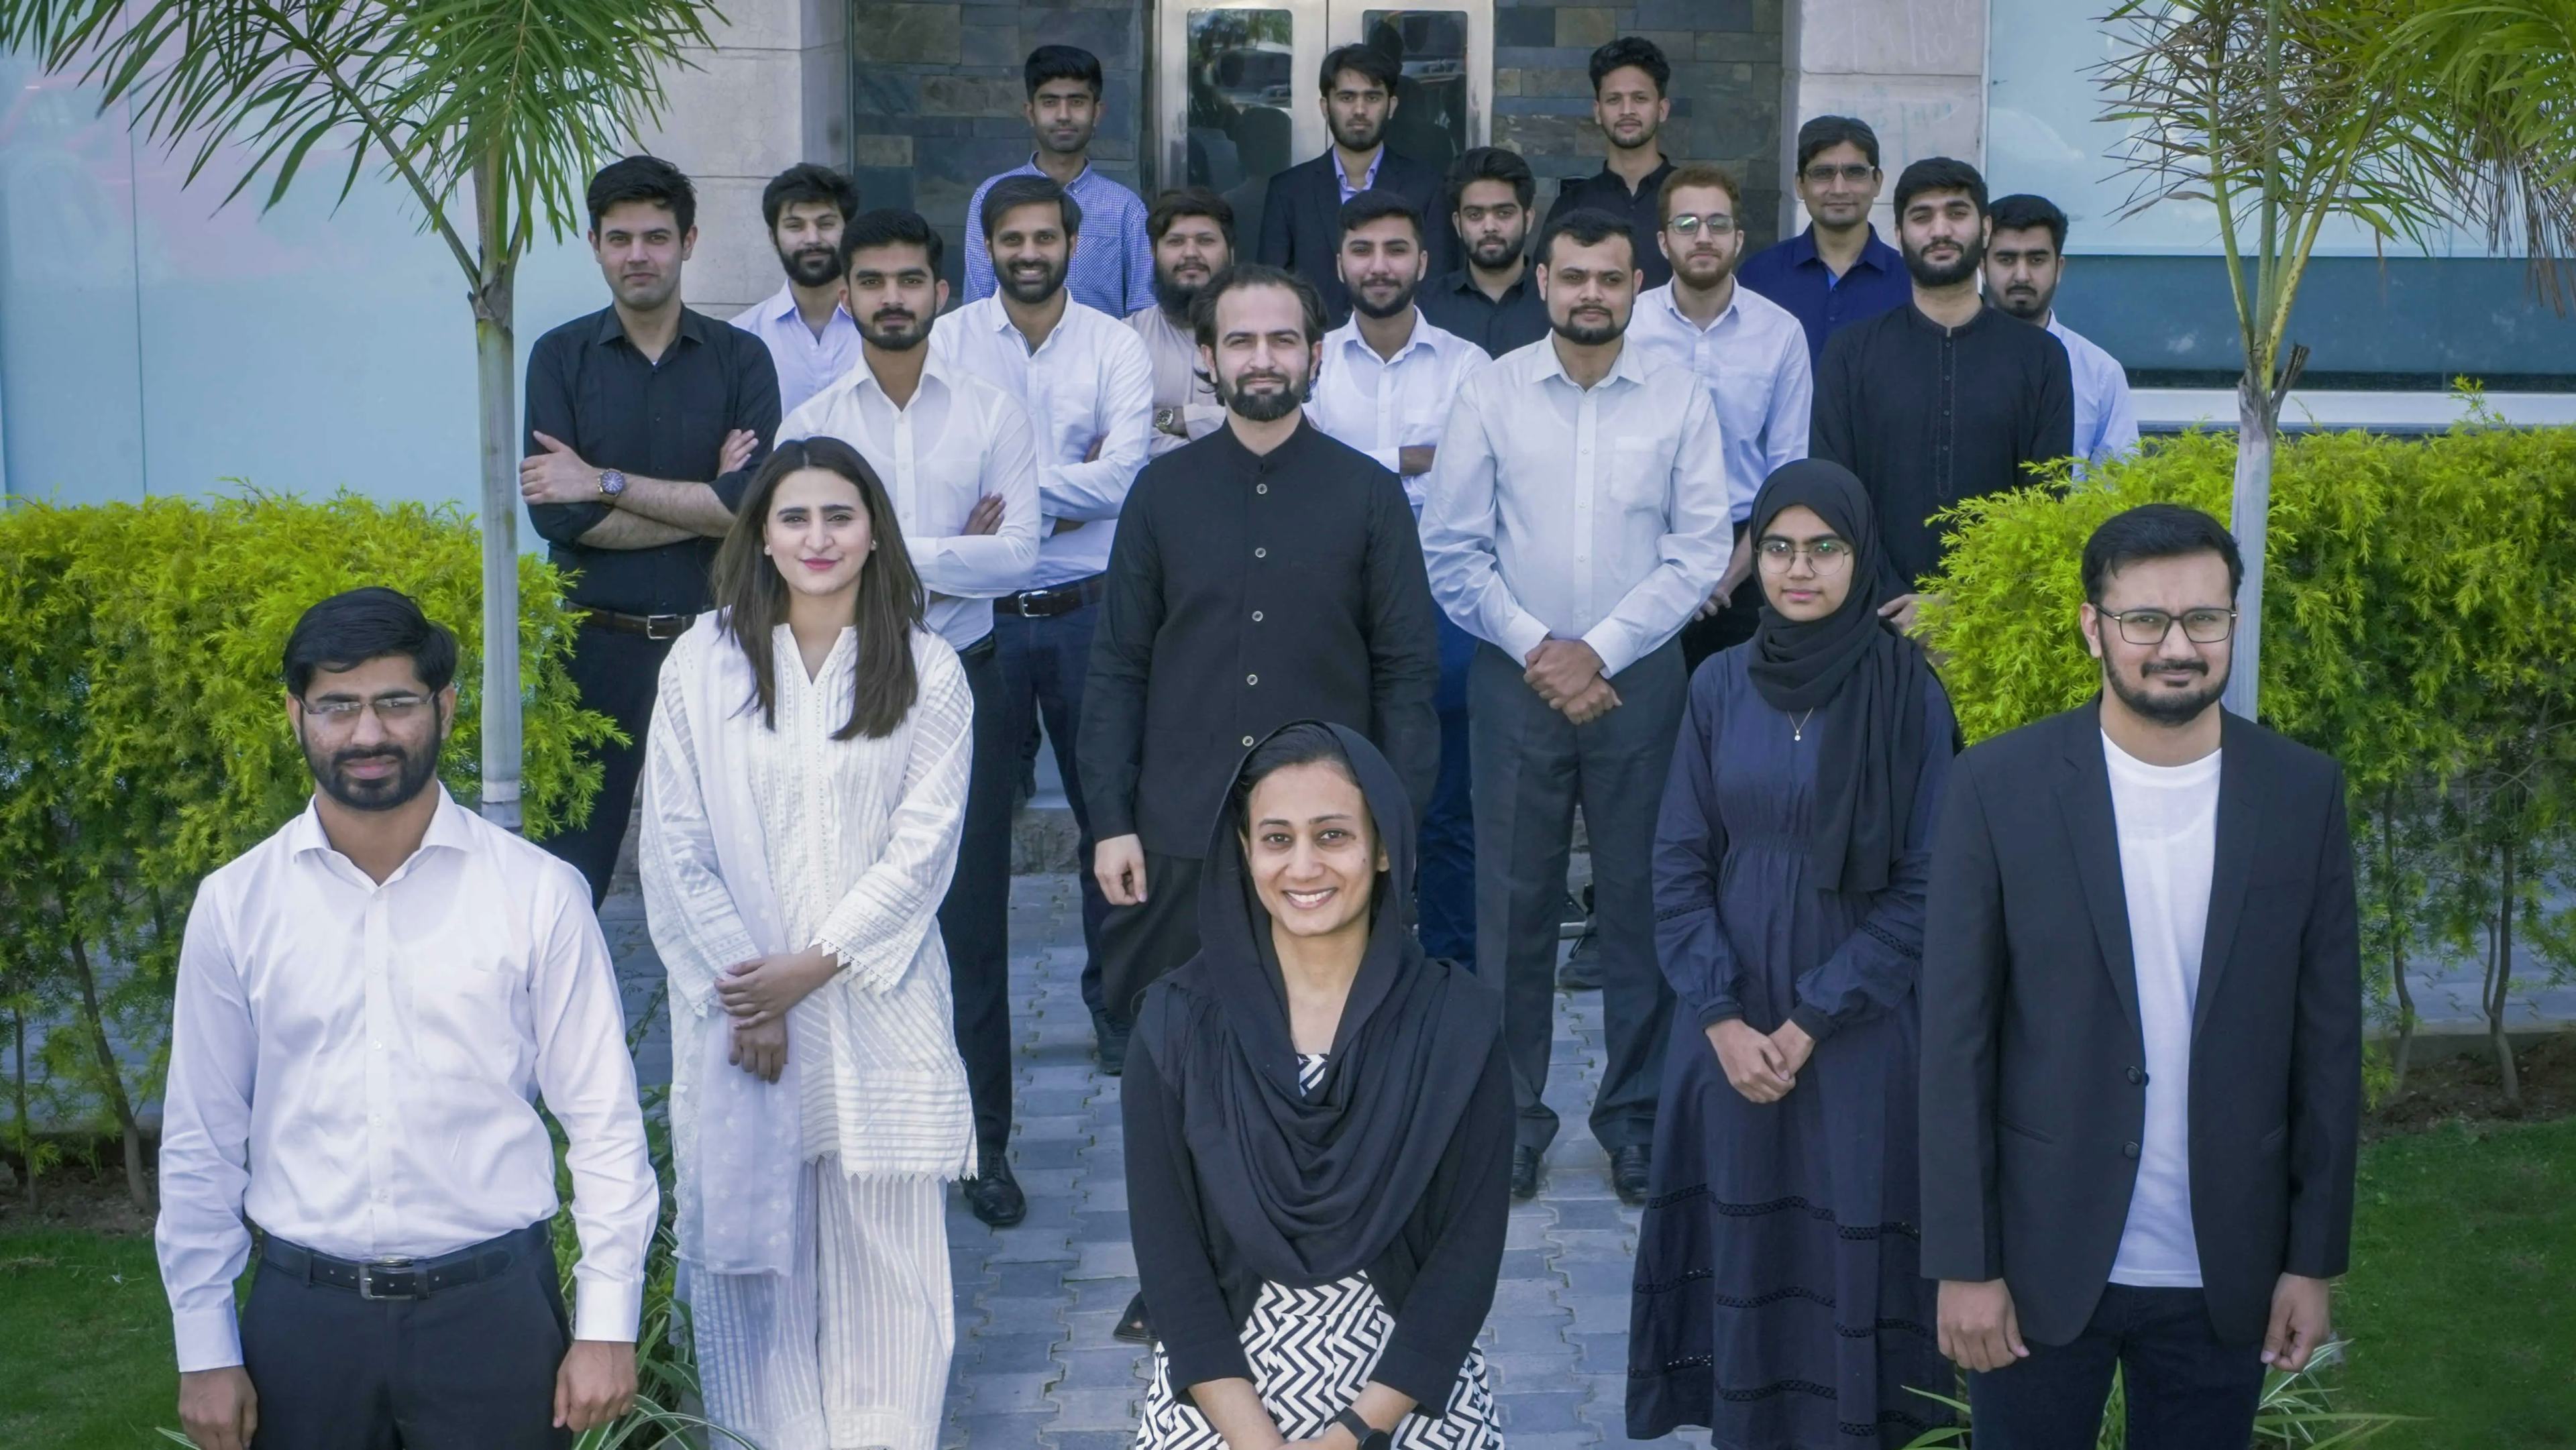 Embedded software team | MRS Technologies Pakistan